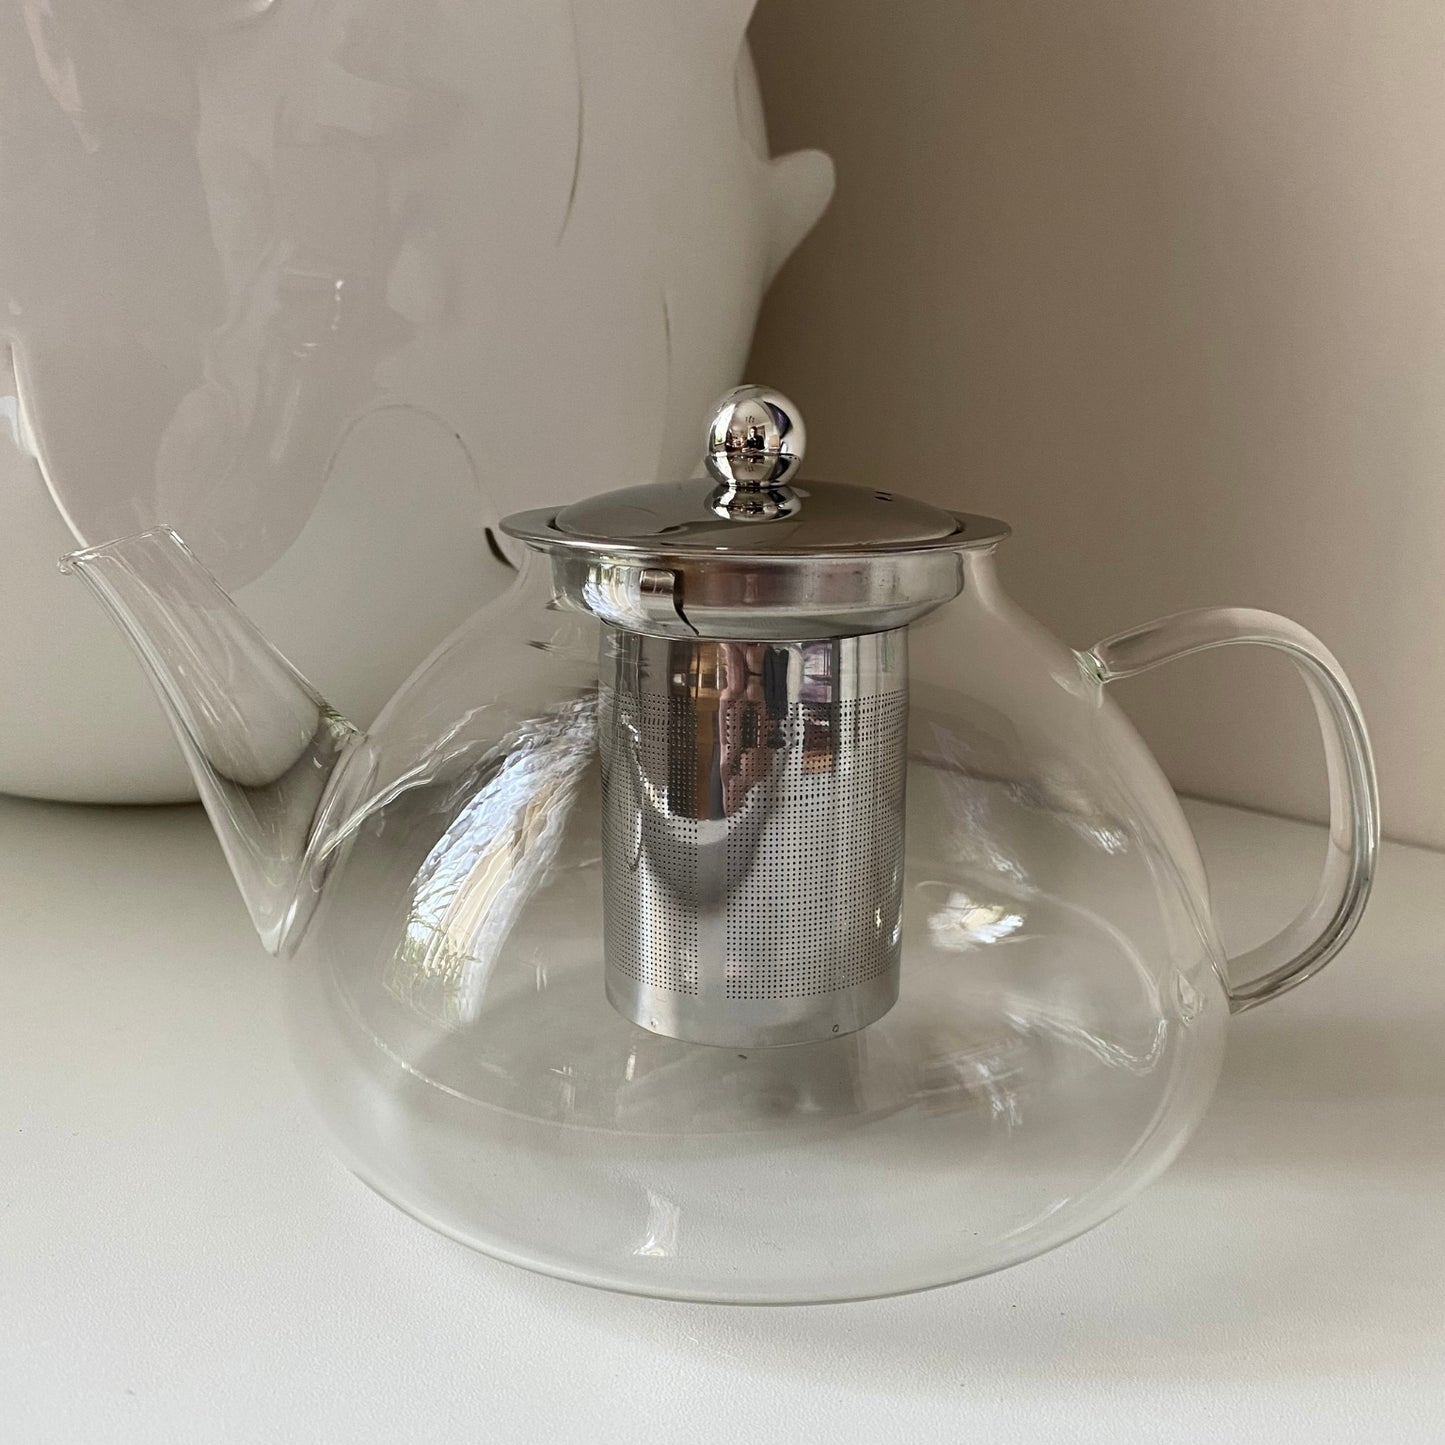 Glass teapot, 1.3L